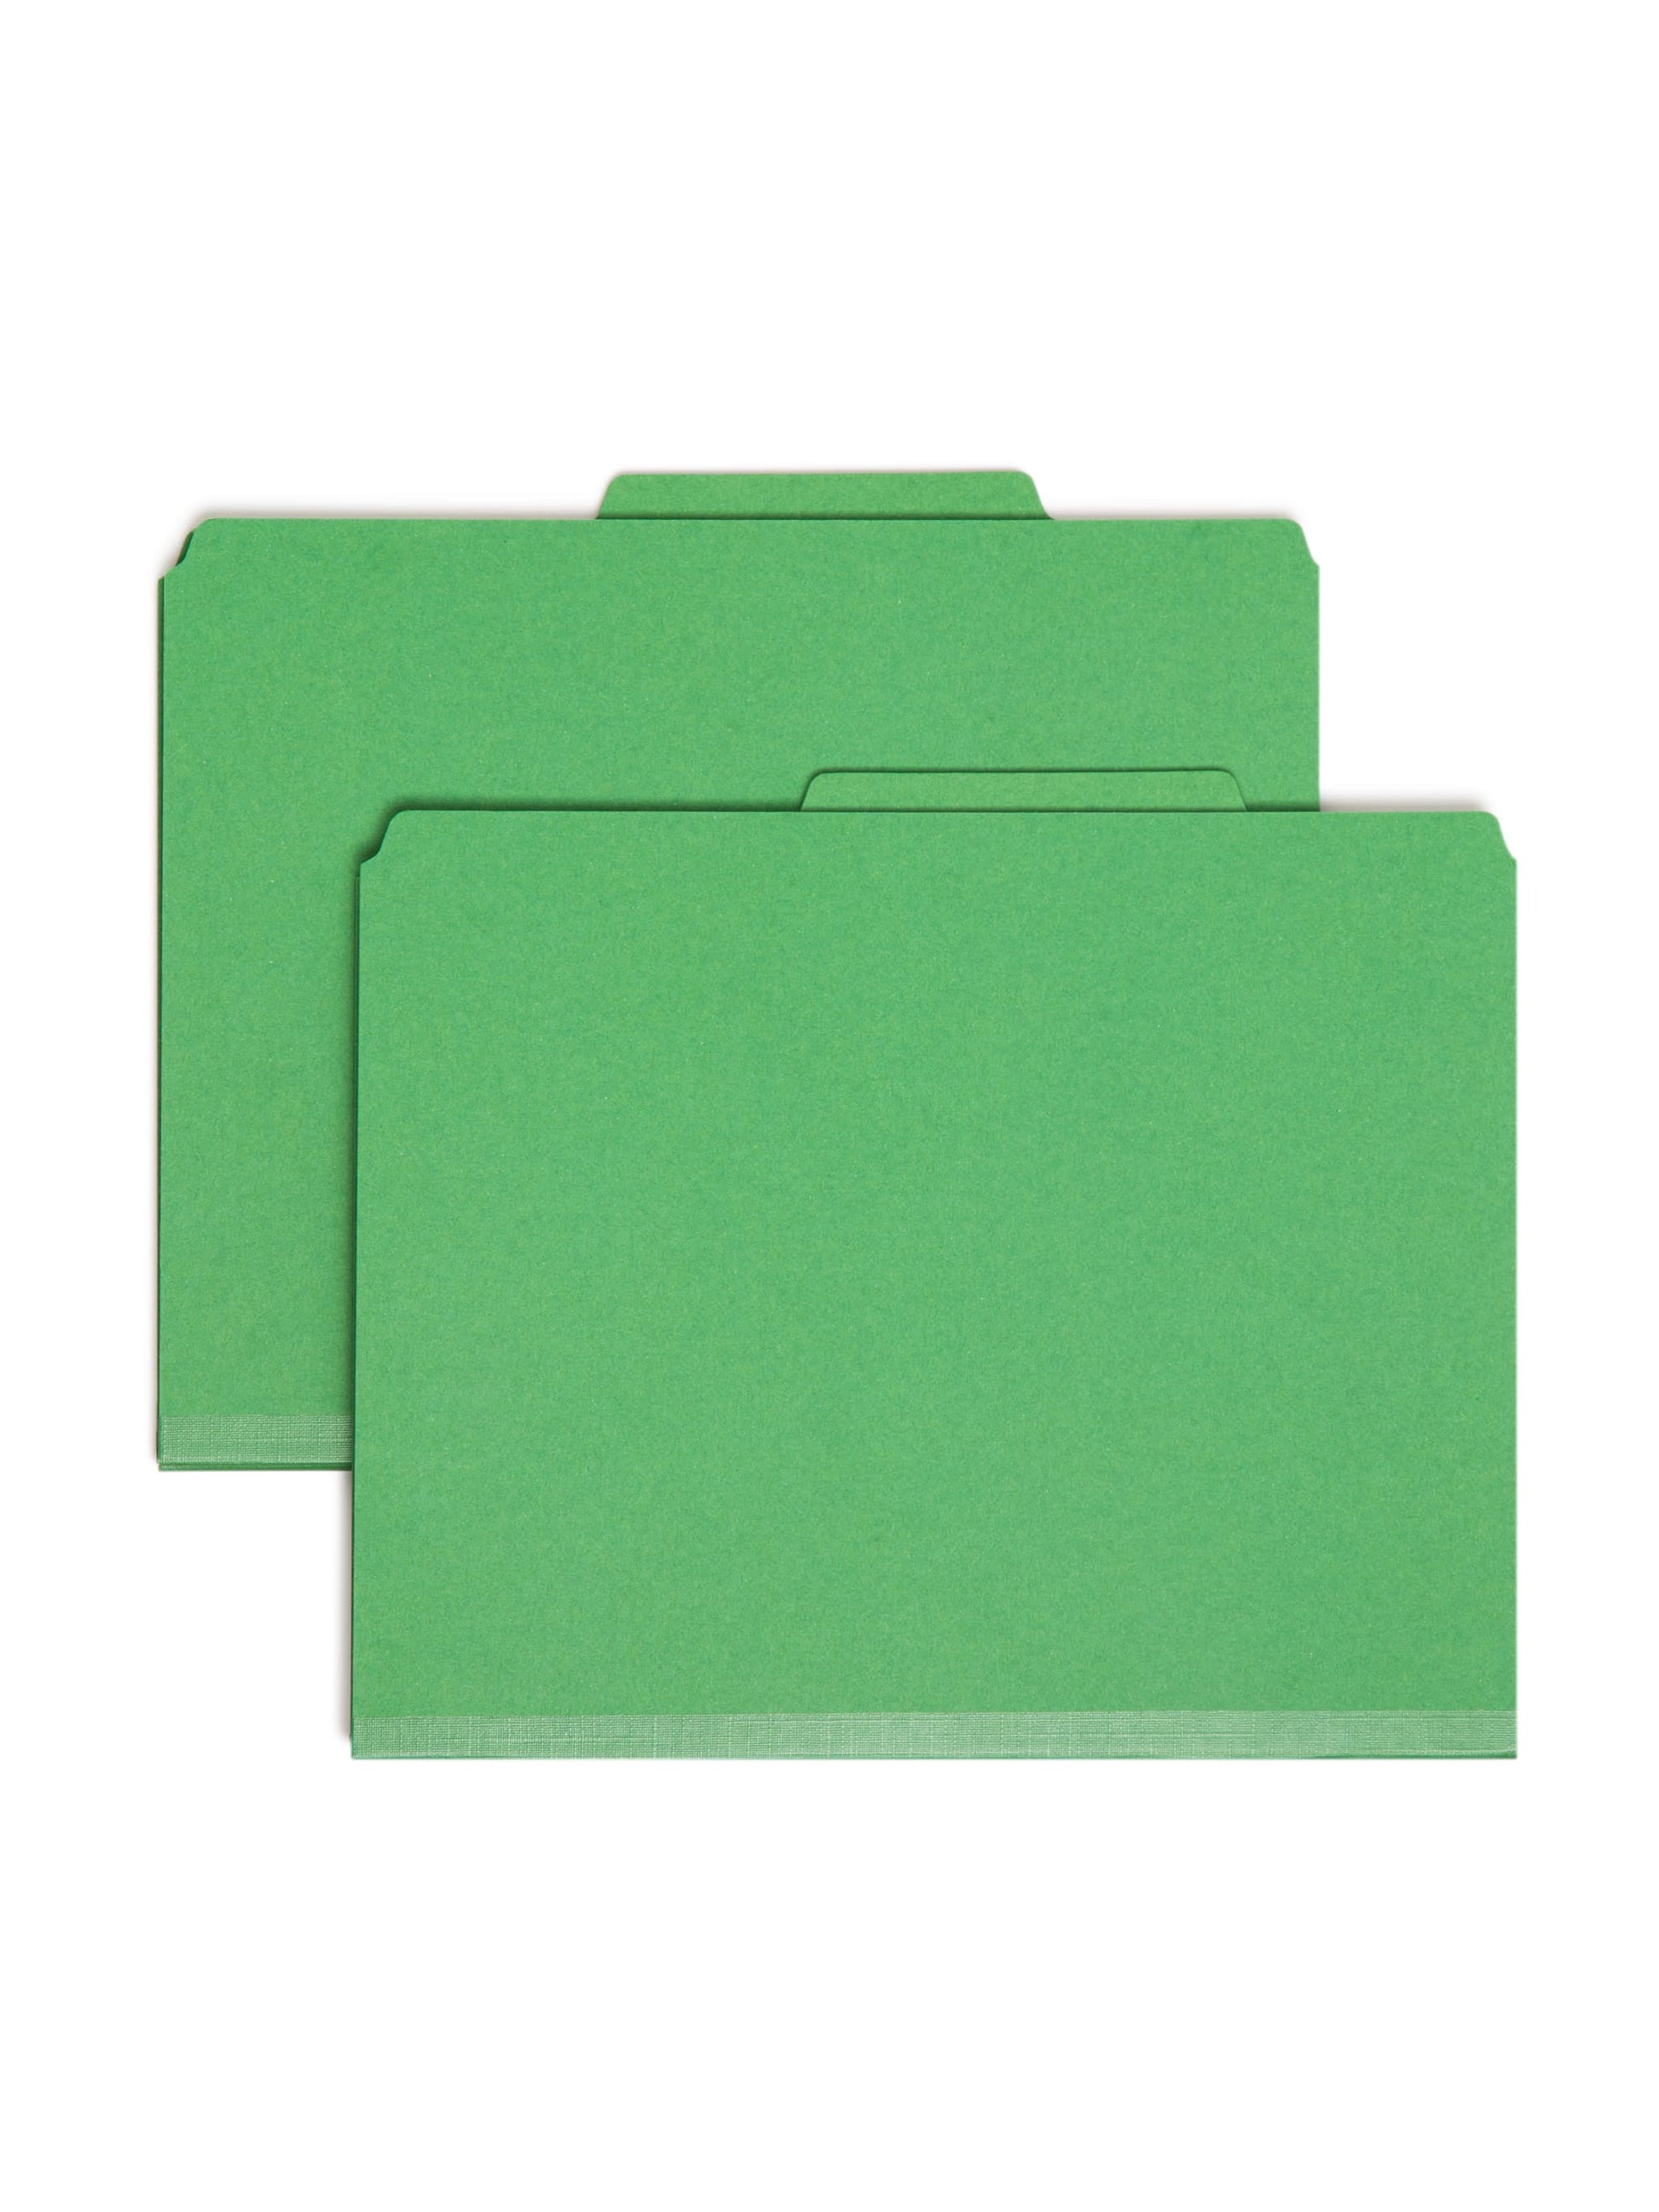 Pressboard Classification File Folders, 2 Dividers, 2 inch Expansion, Green Color, Letter Size, Set of 0, 30086486140639